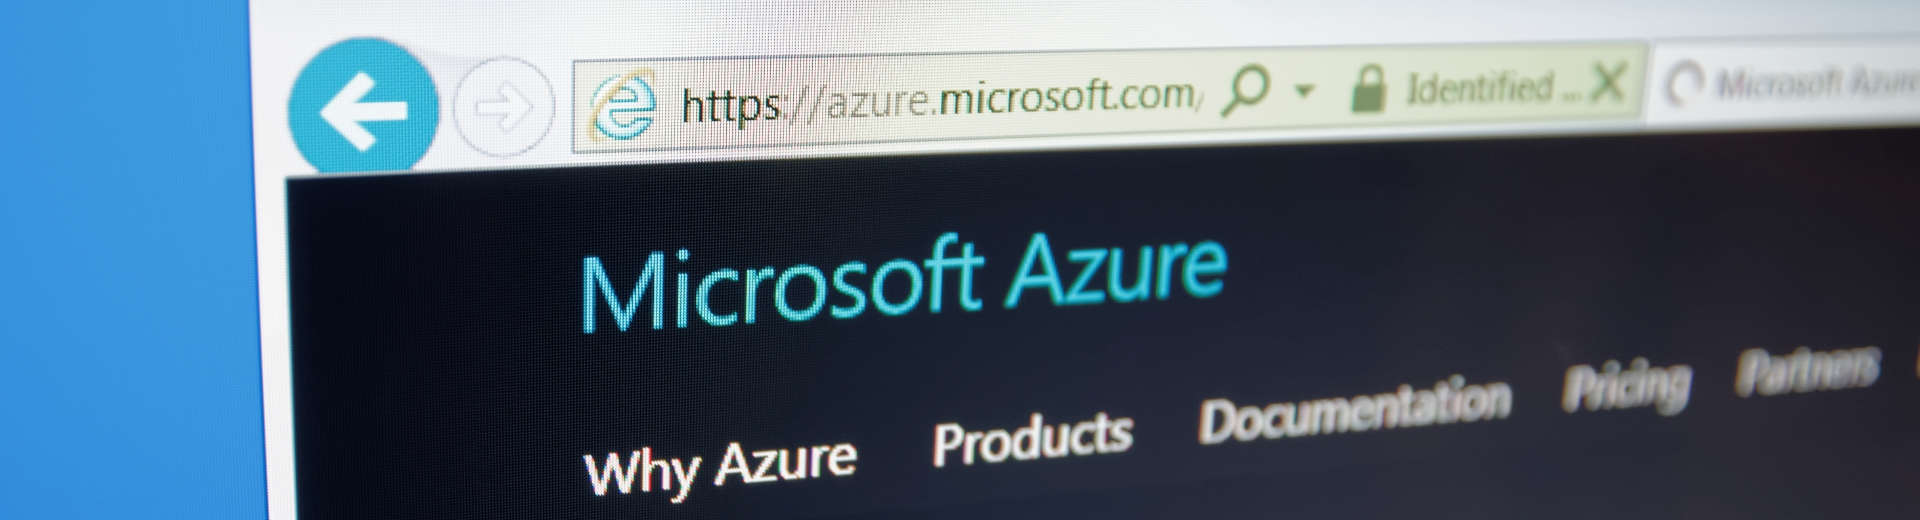 Microsoft Azure website displayed on a laptop screen